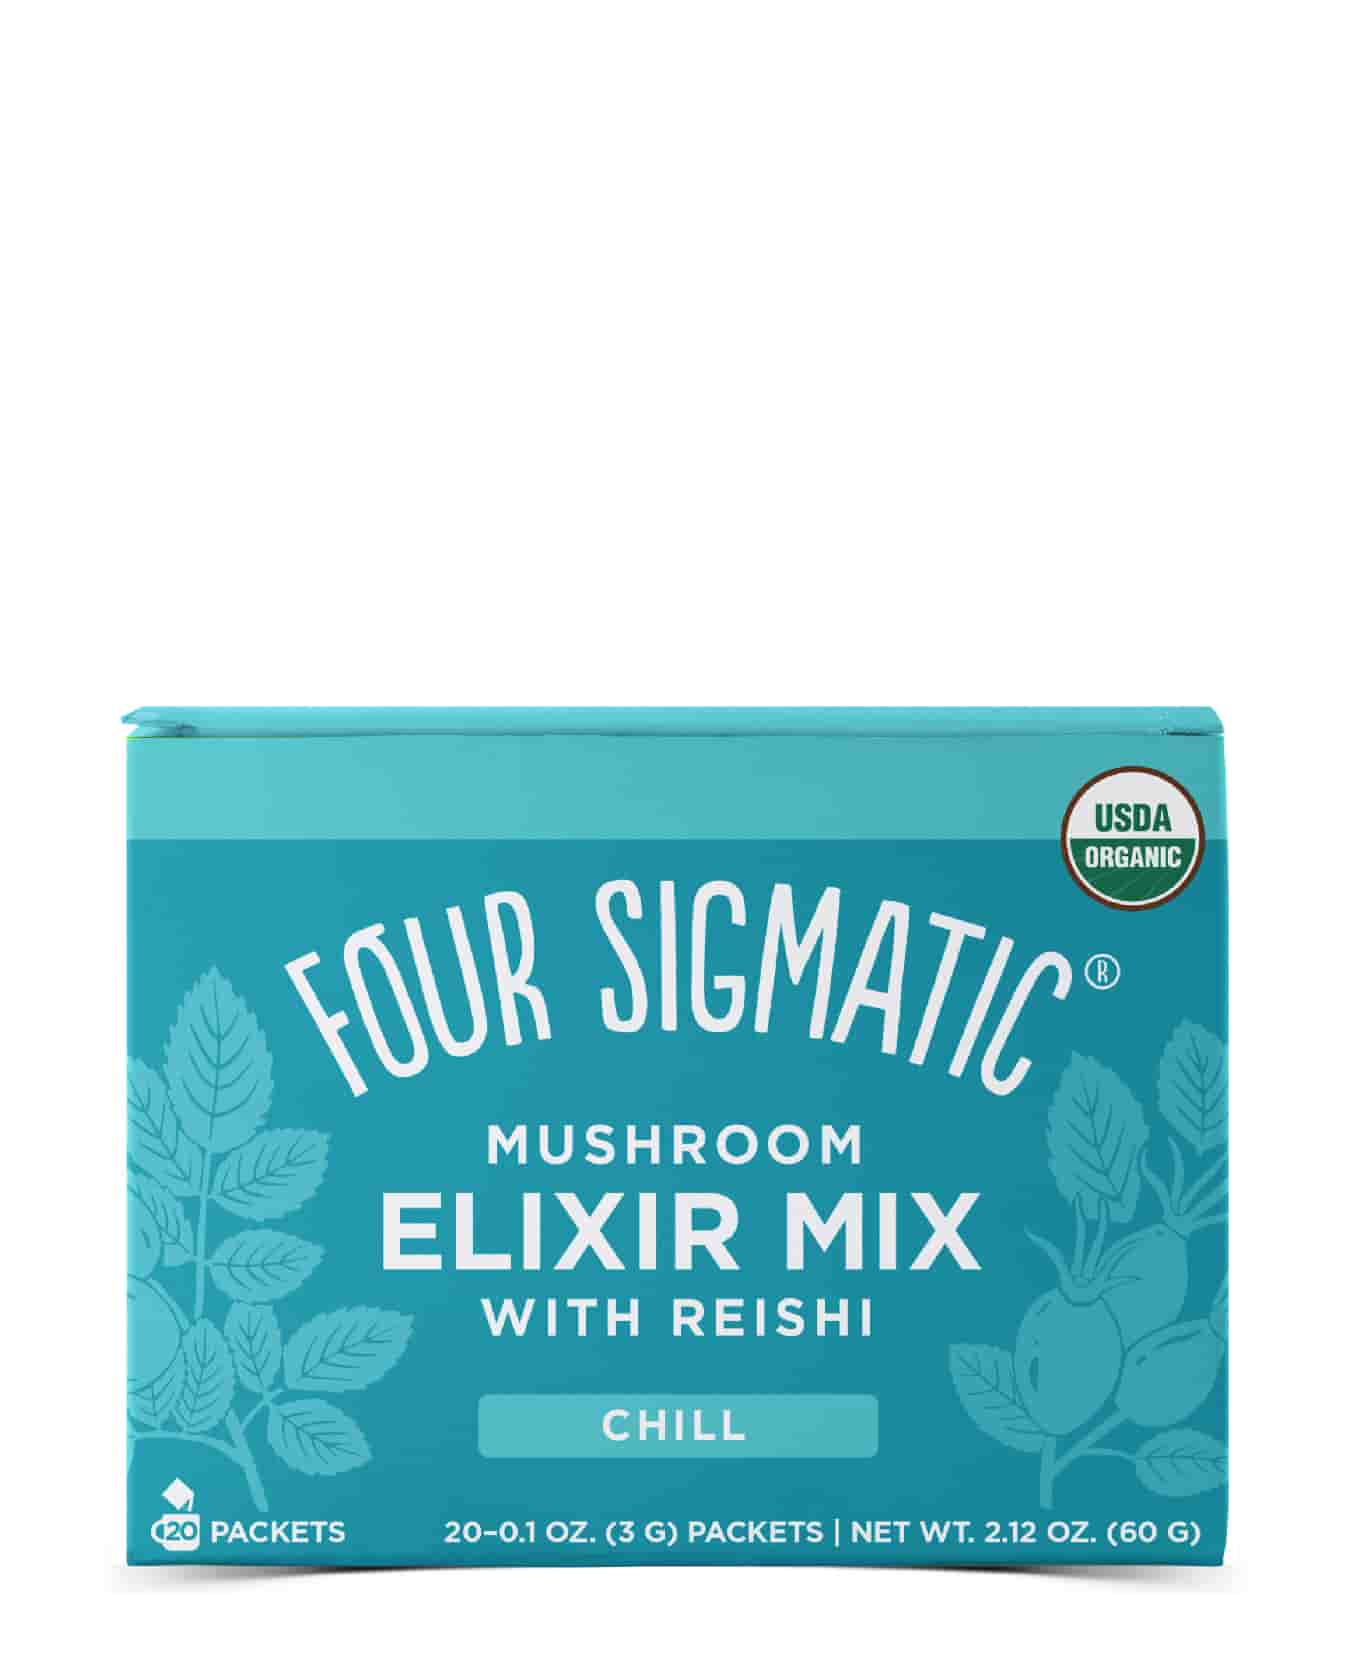 Buy Four Sigmatic Reishi Mushroom Elixir Mix at LiveHelfi